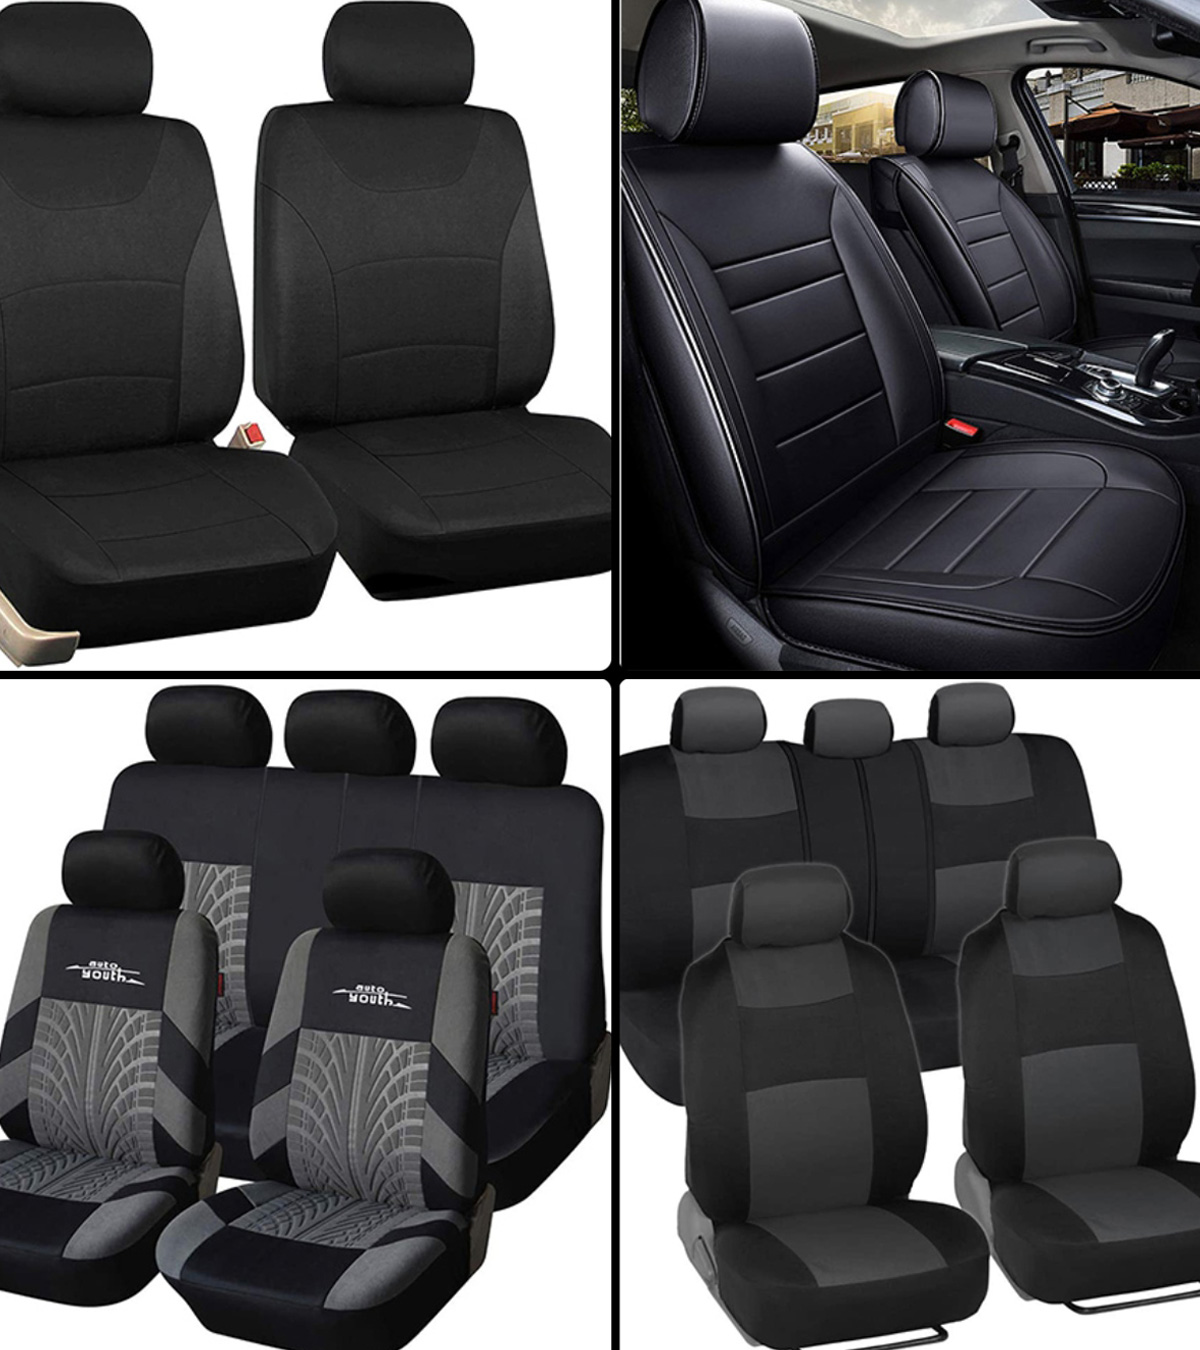 https://www.momjunction.com/wp-content/uploads/2021/03/Best-Car-Seat-Covers.jpg